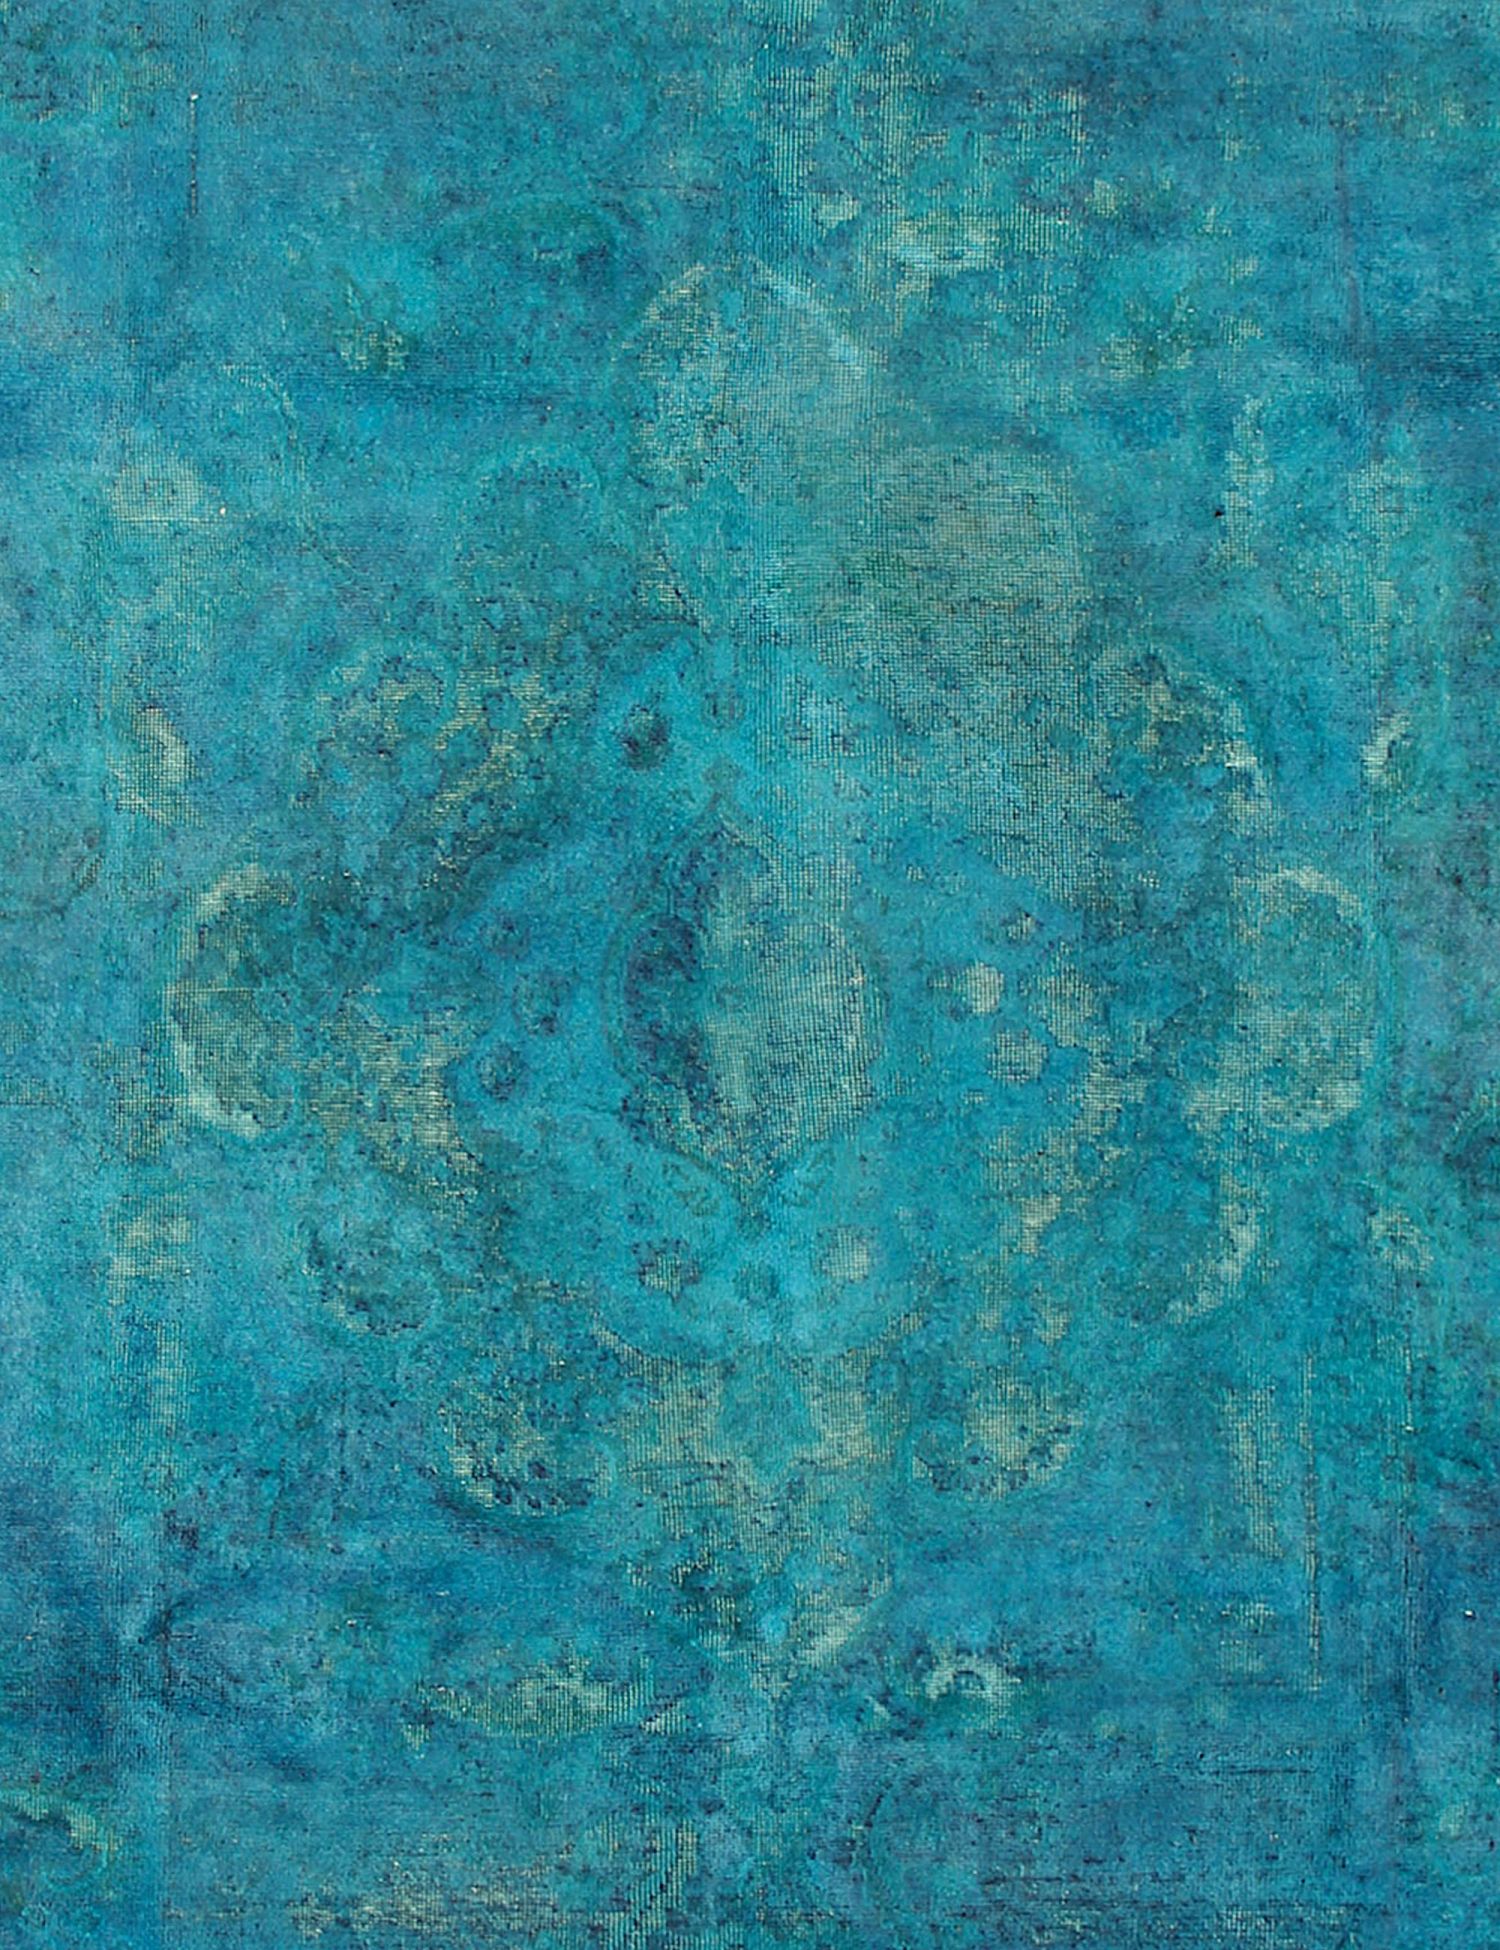 Quadrat  Vintage Teppich  türkis <br/>213 x 213 cm